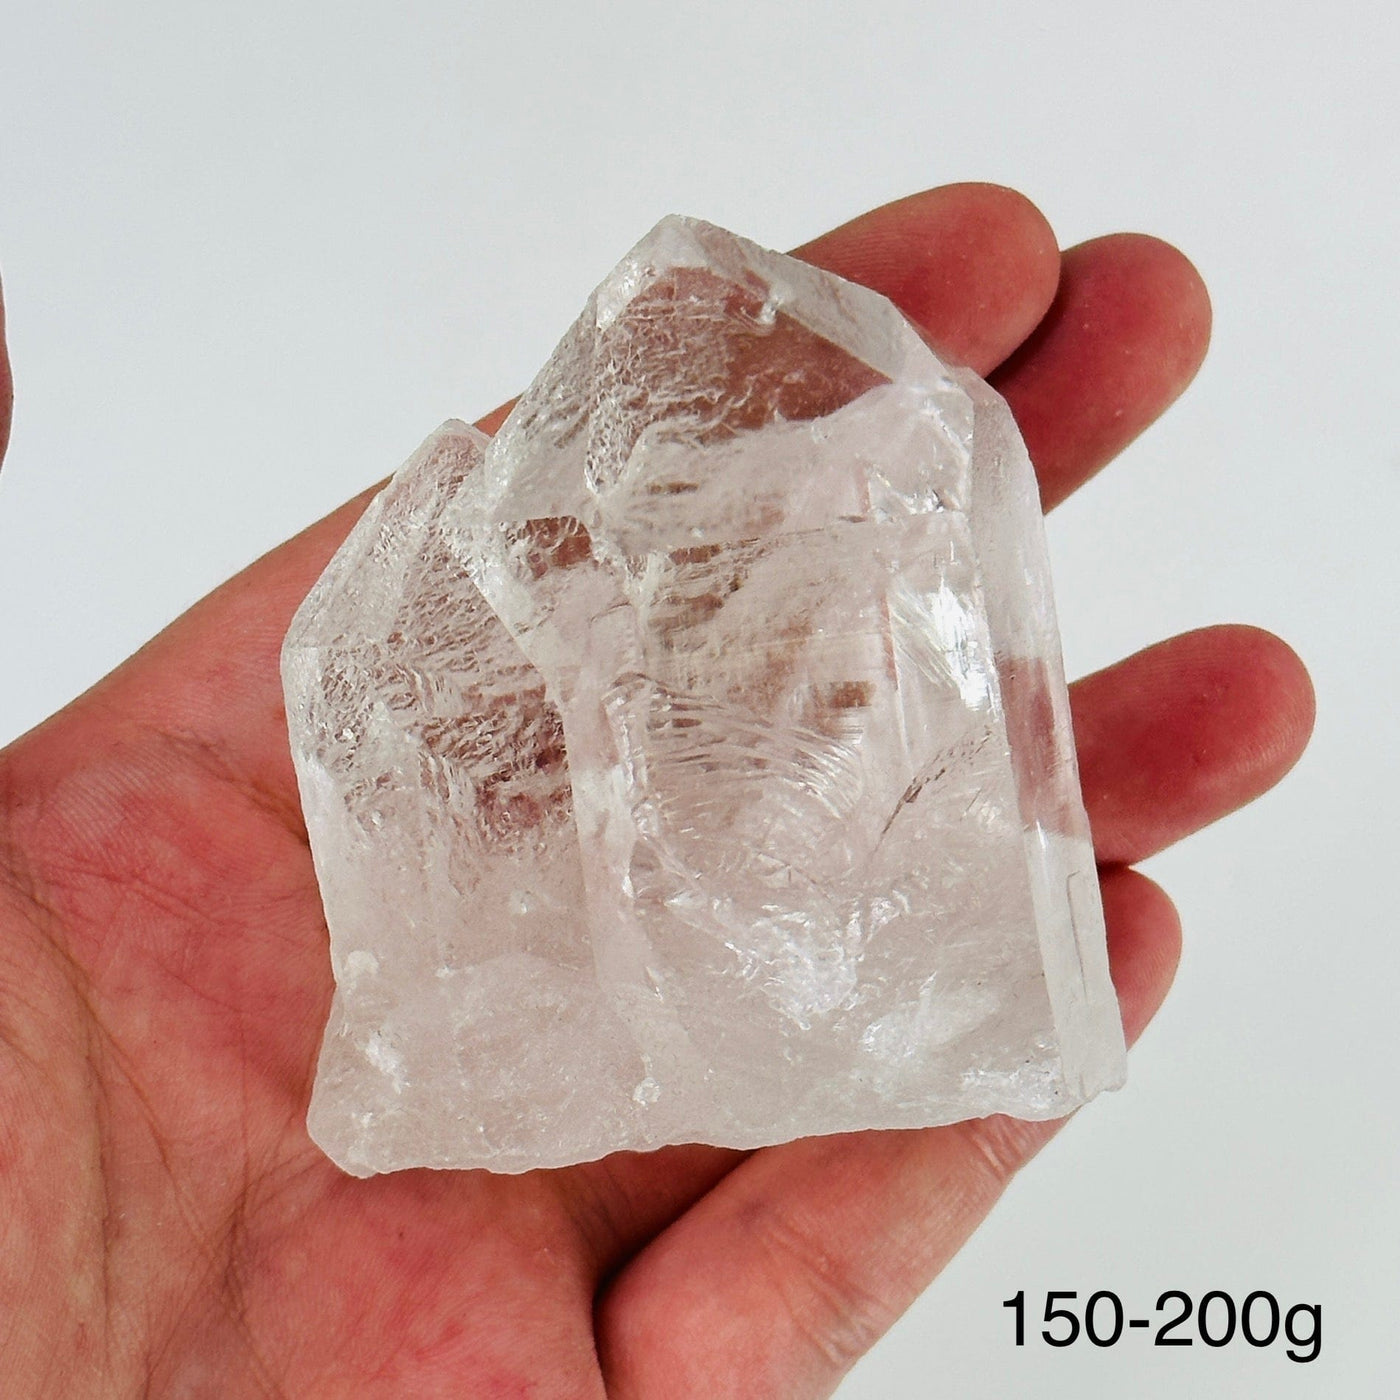 hand holding up crystal quartz point on white background